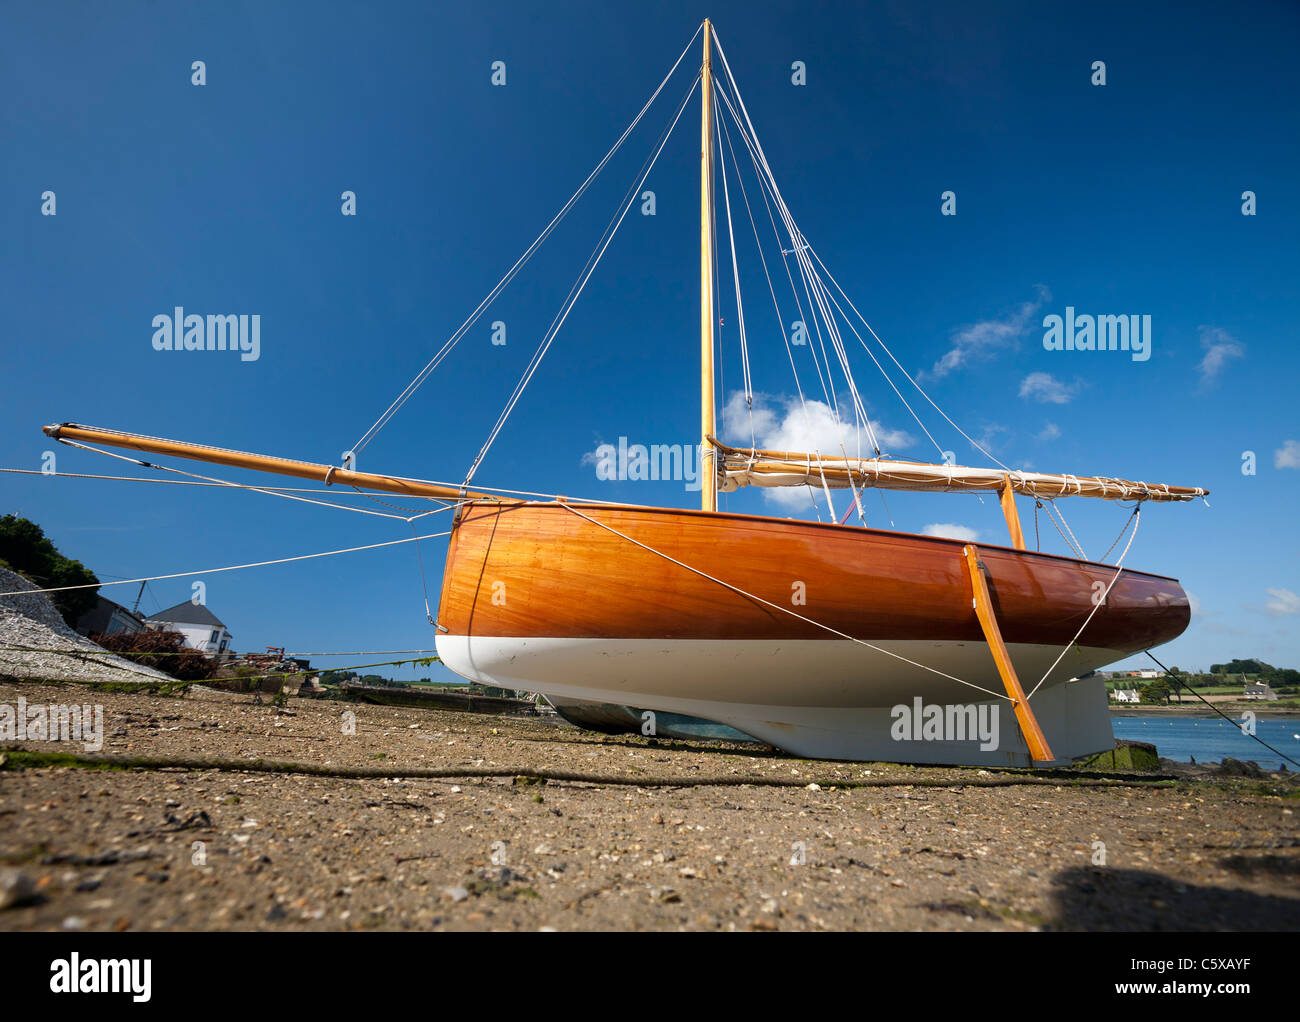 At low tide, a stranded sailing boat on shores (Brittany - France). Voilier sur ses béquilles à marée basse (Bretagne - France). Stock Photo